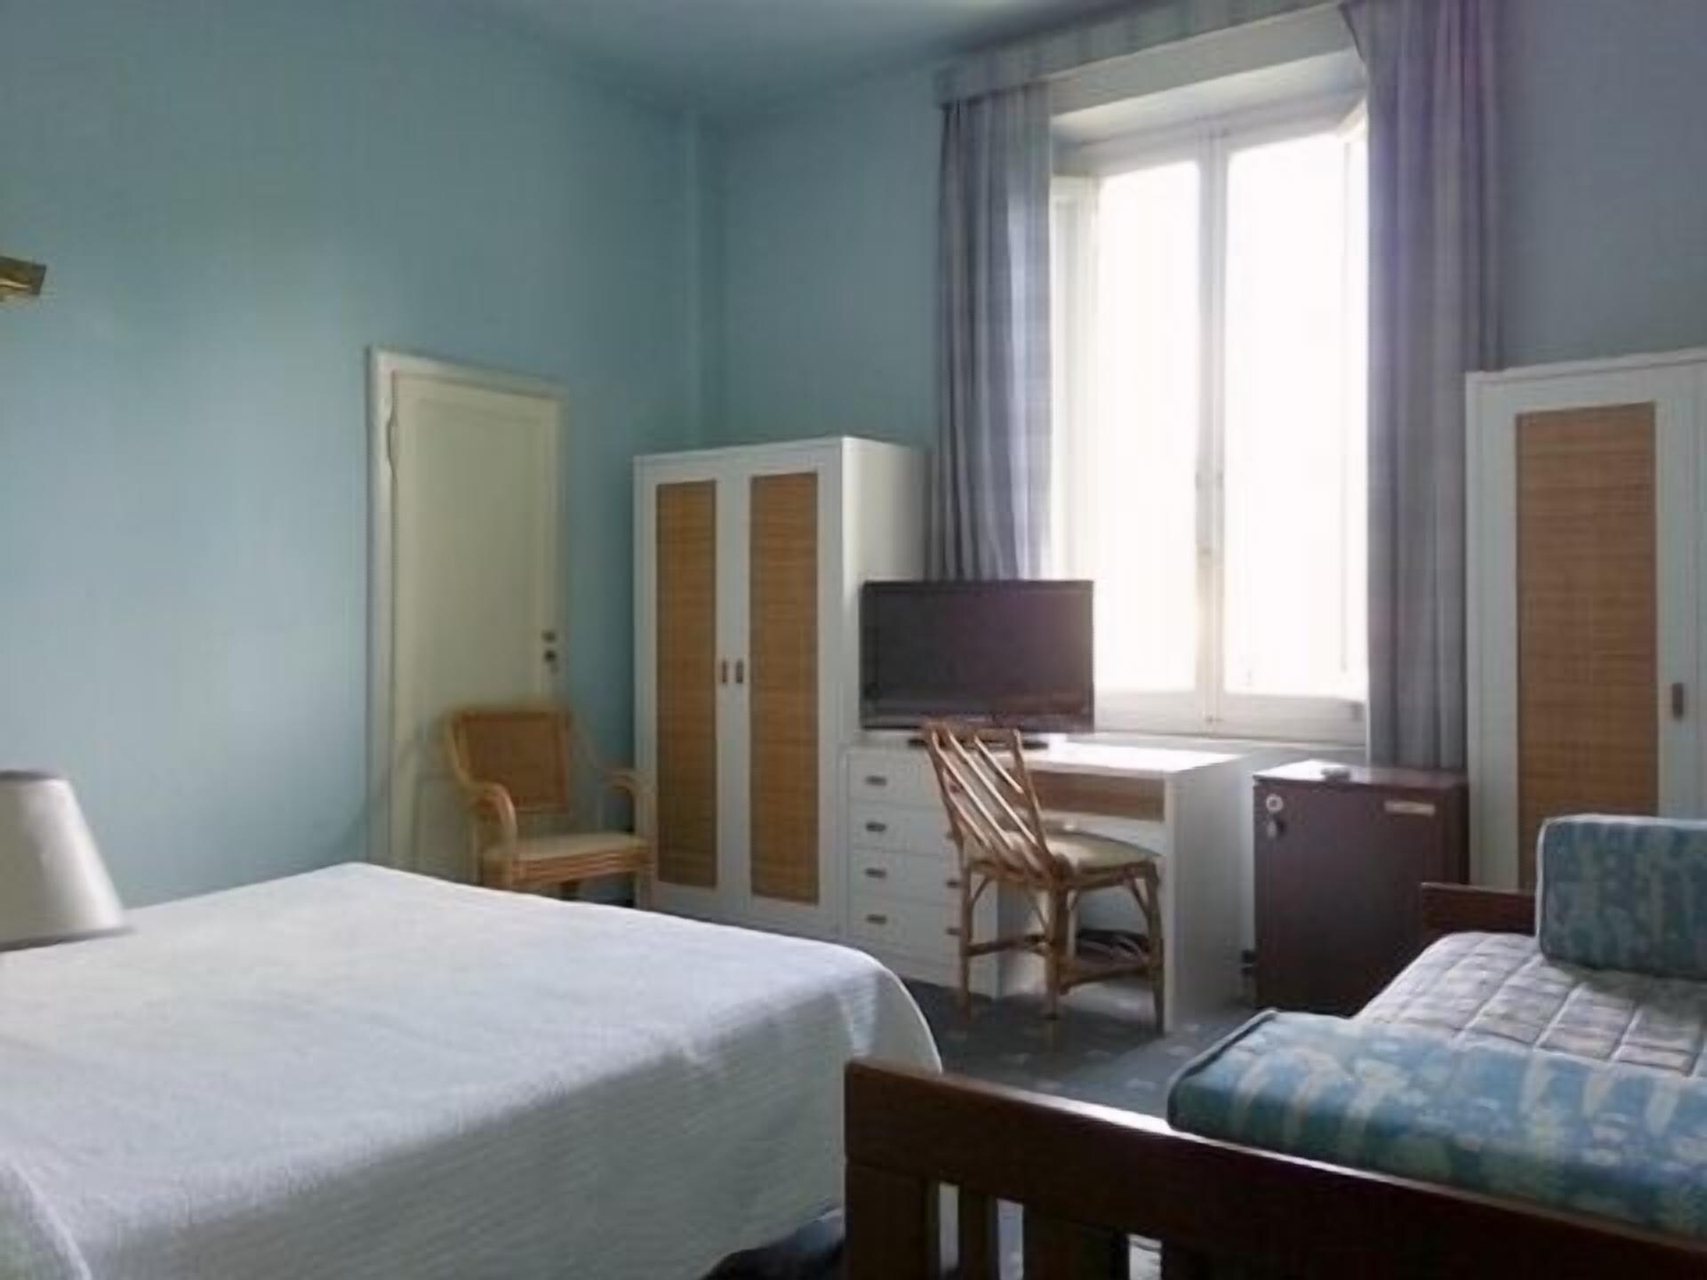 Room 1, Mediterraneo, Pistoia